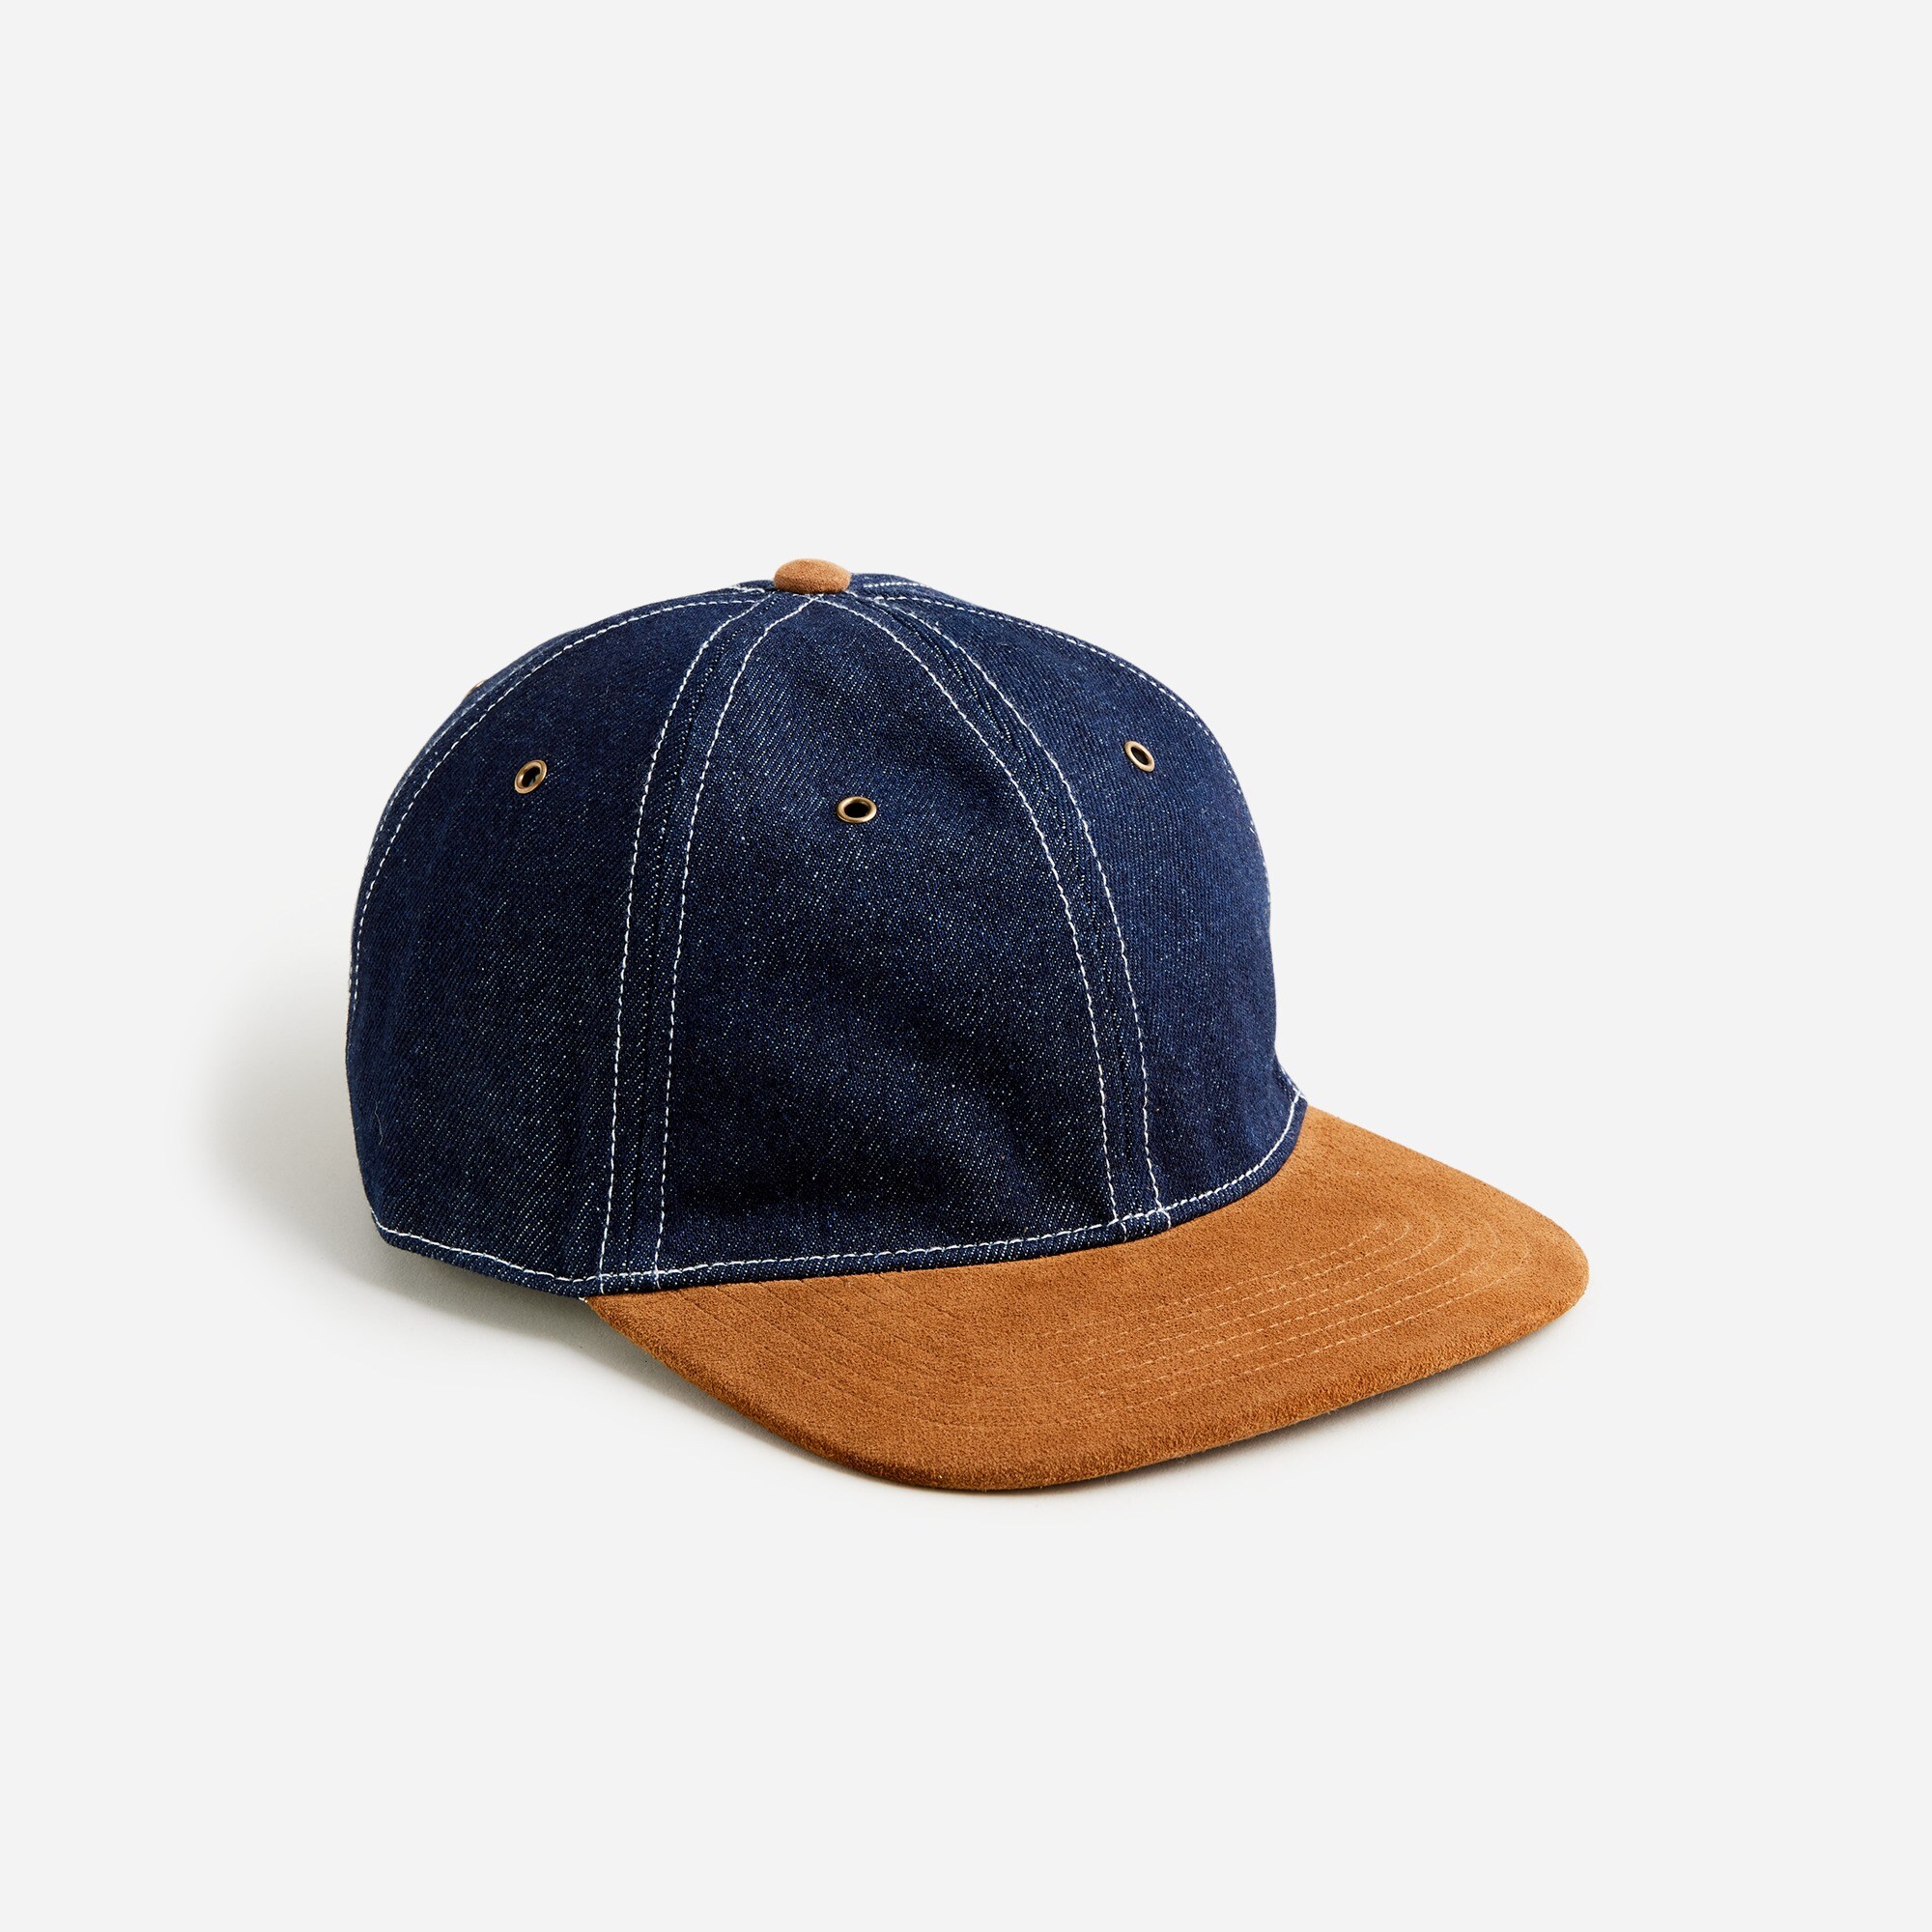  Denim baseball cap with suede brim